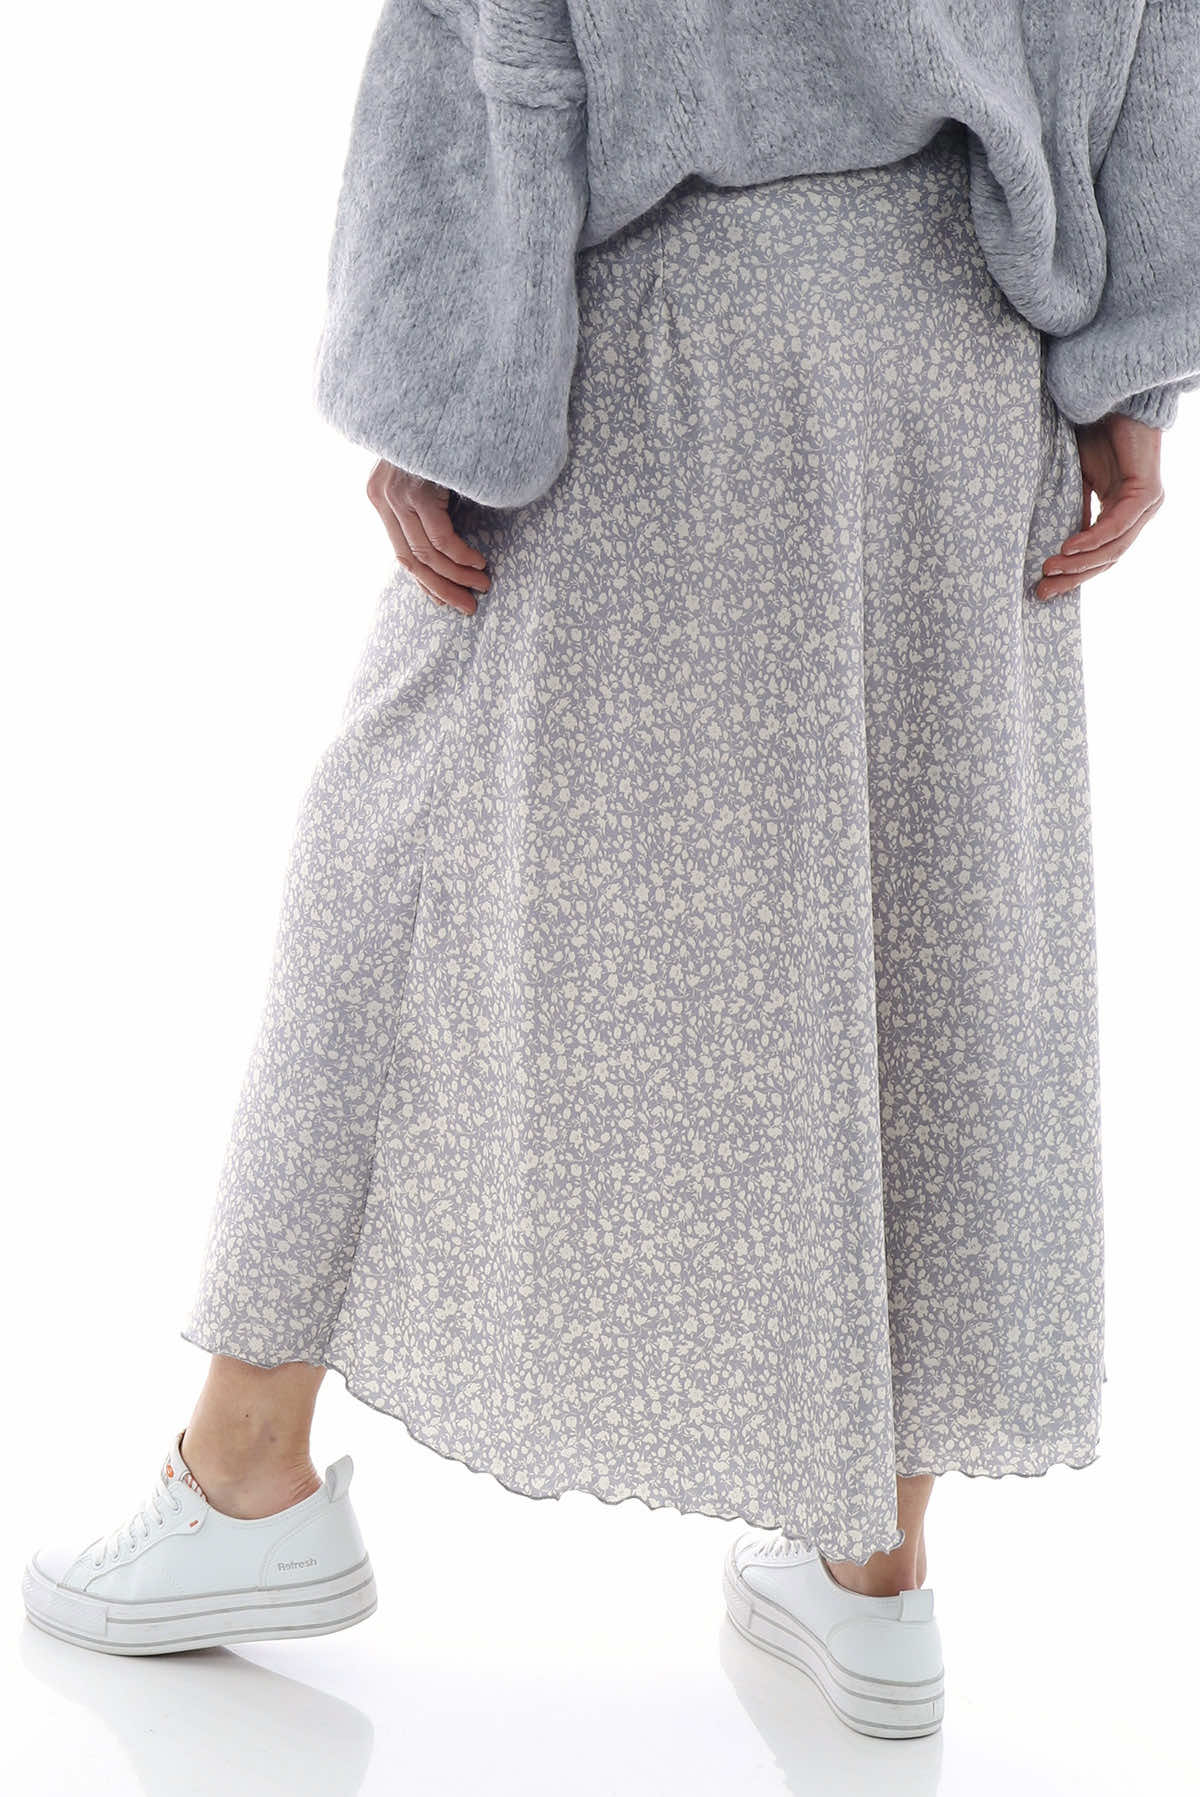 Ottilie Floral Print Skirt Grey